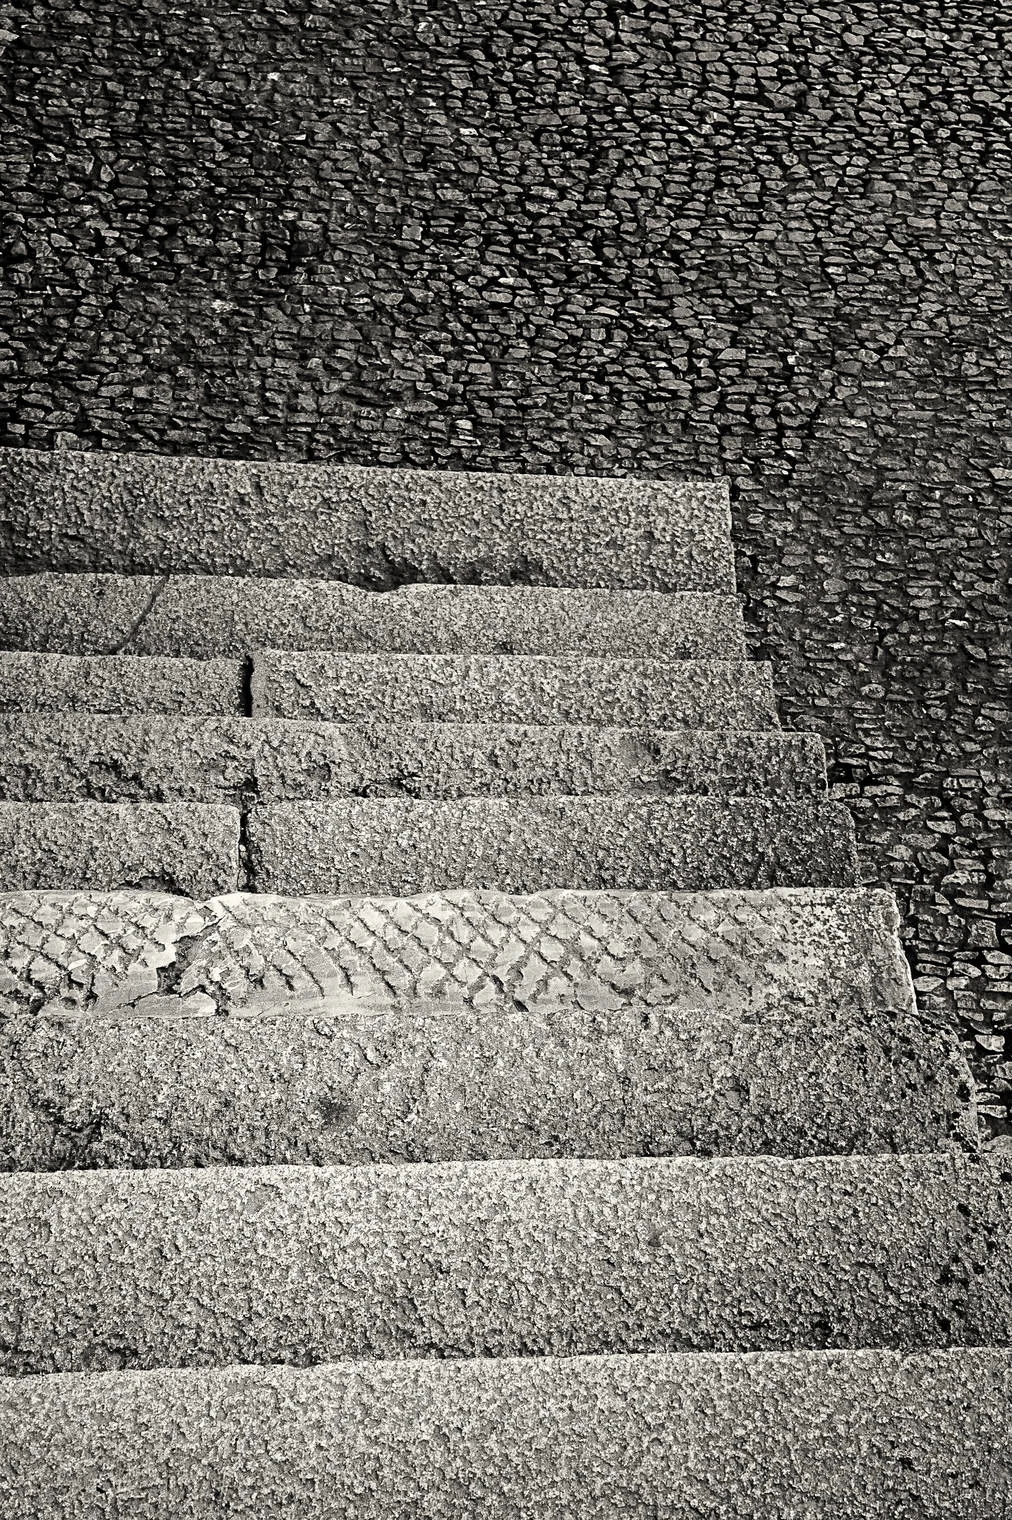 granite steps